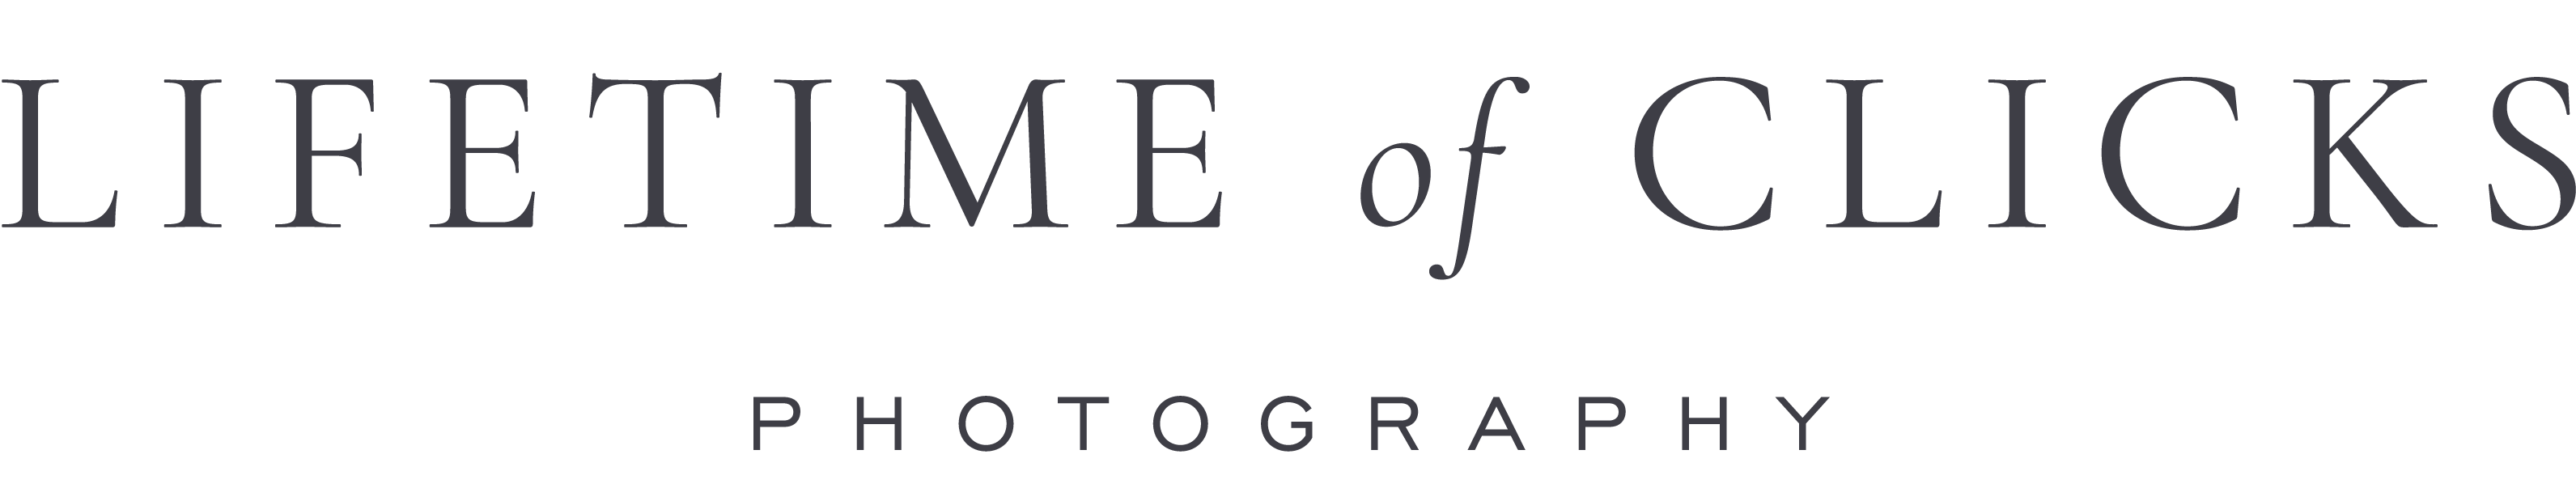 Logo: Lifetime of Clicks Photography. 